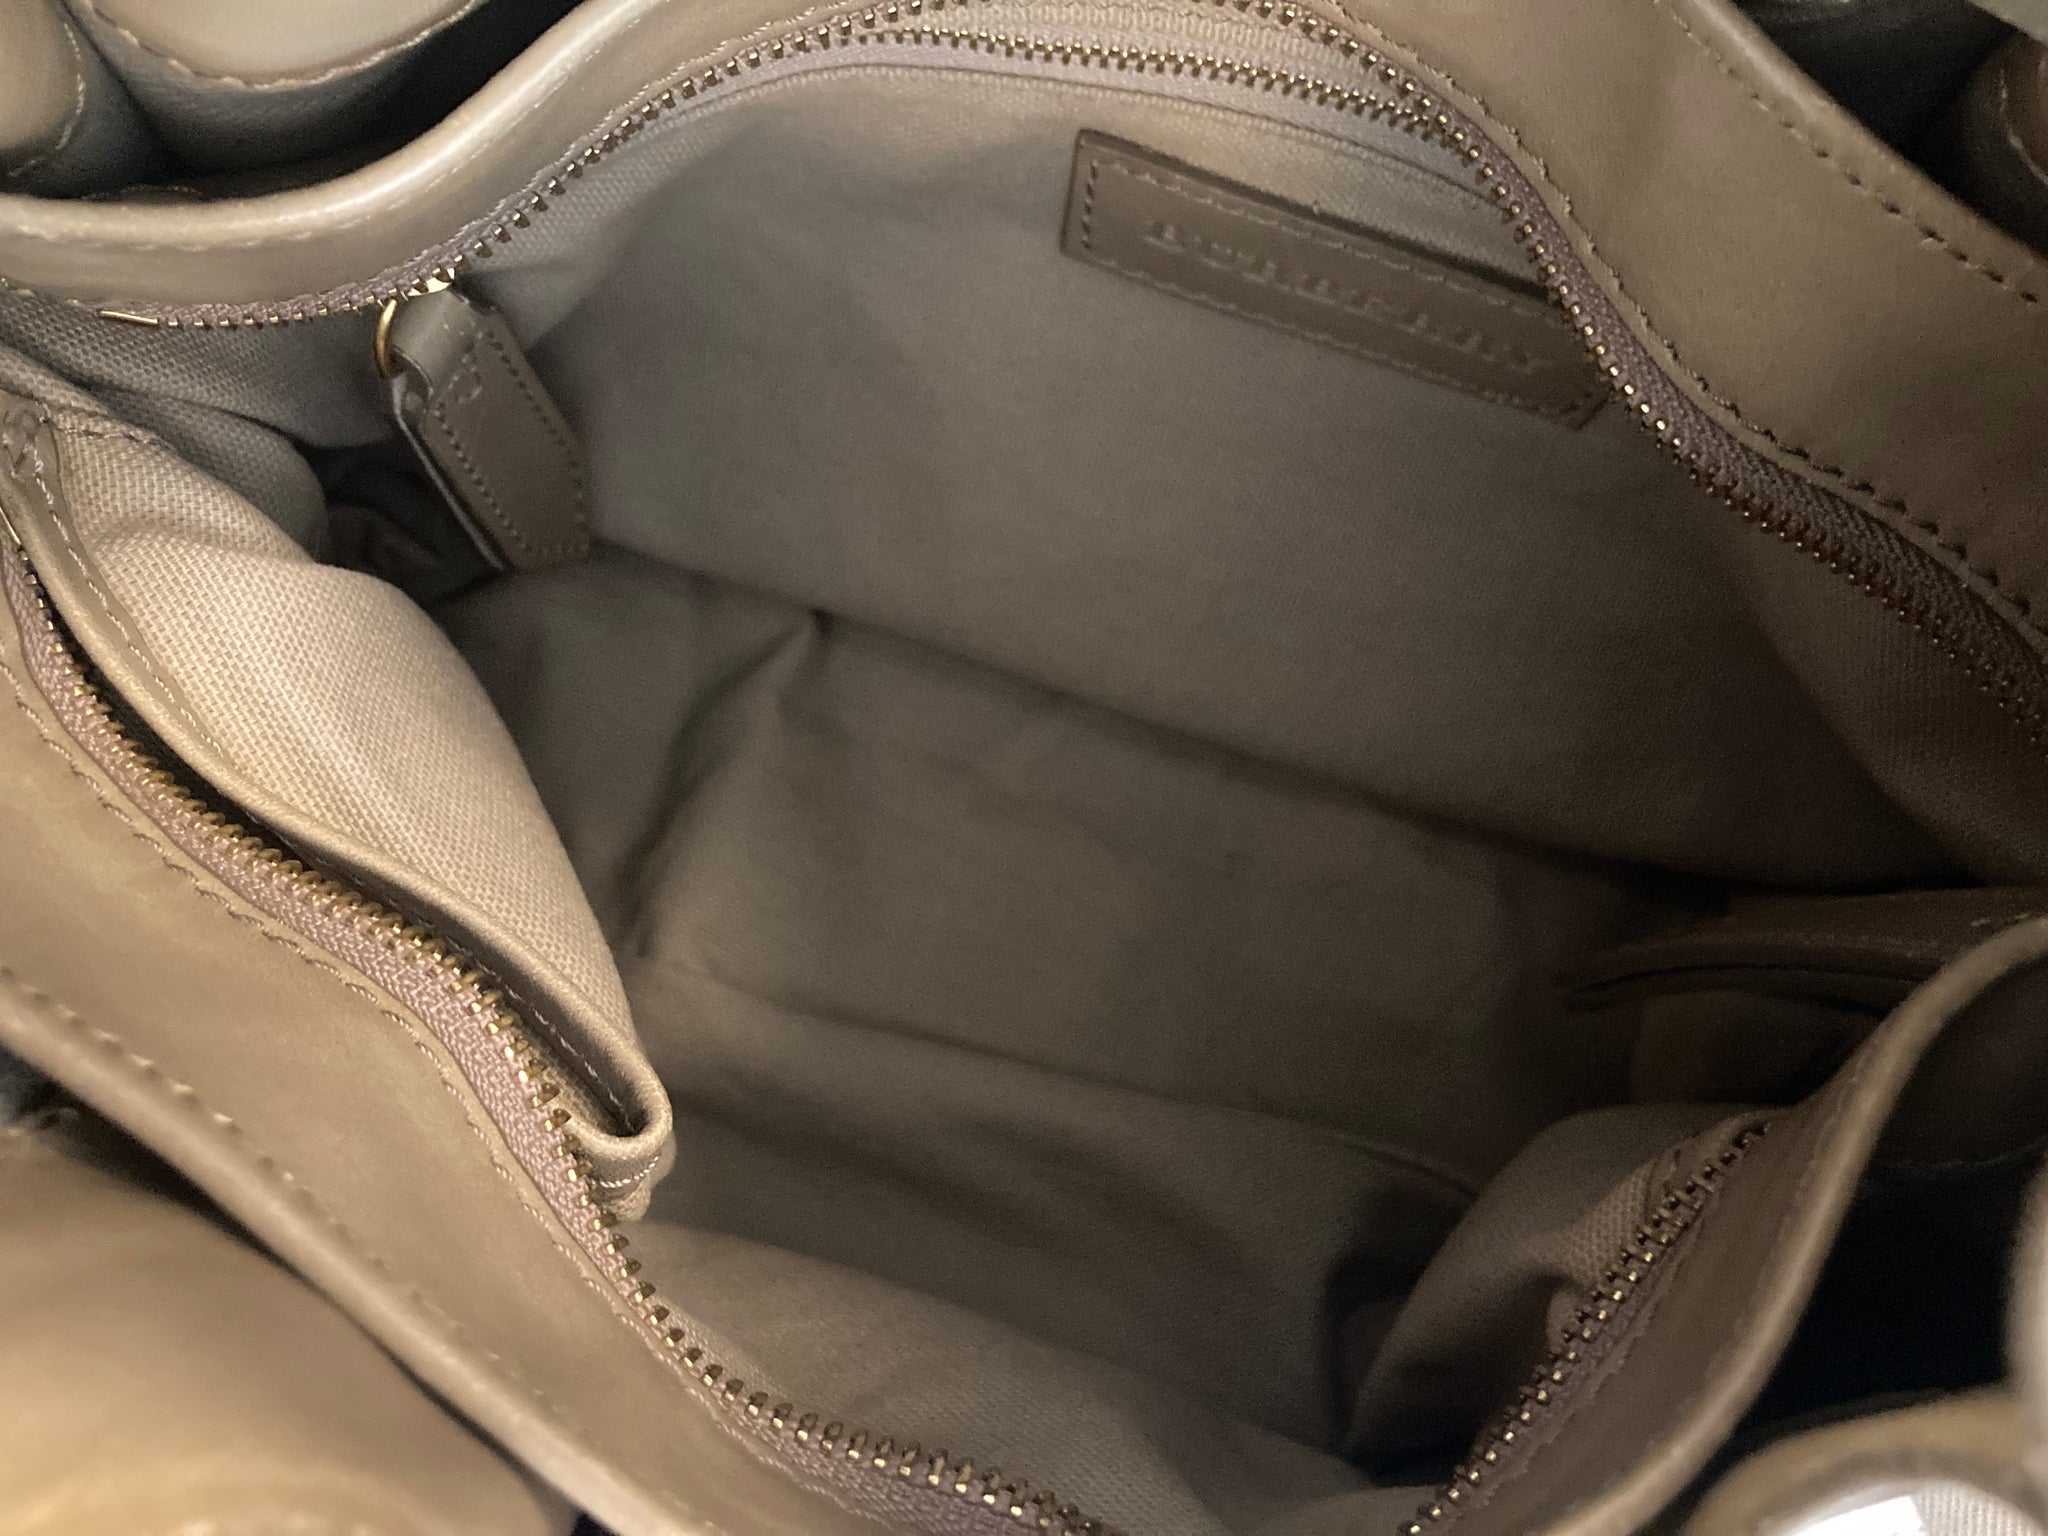 Leather and Check Shoulder Bag